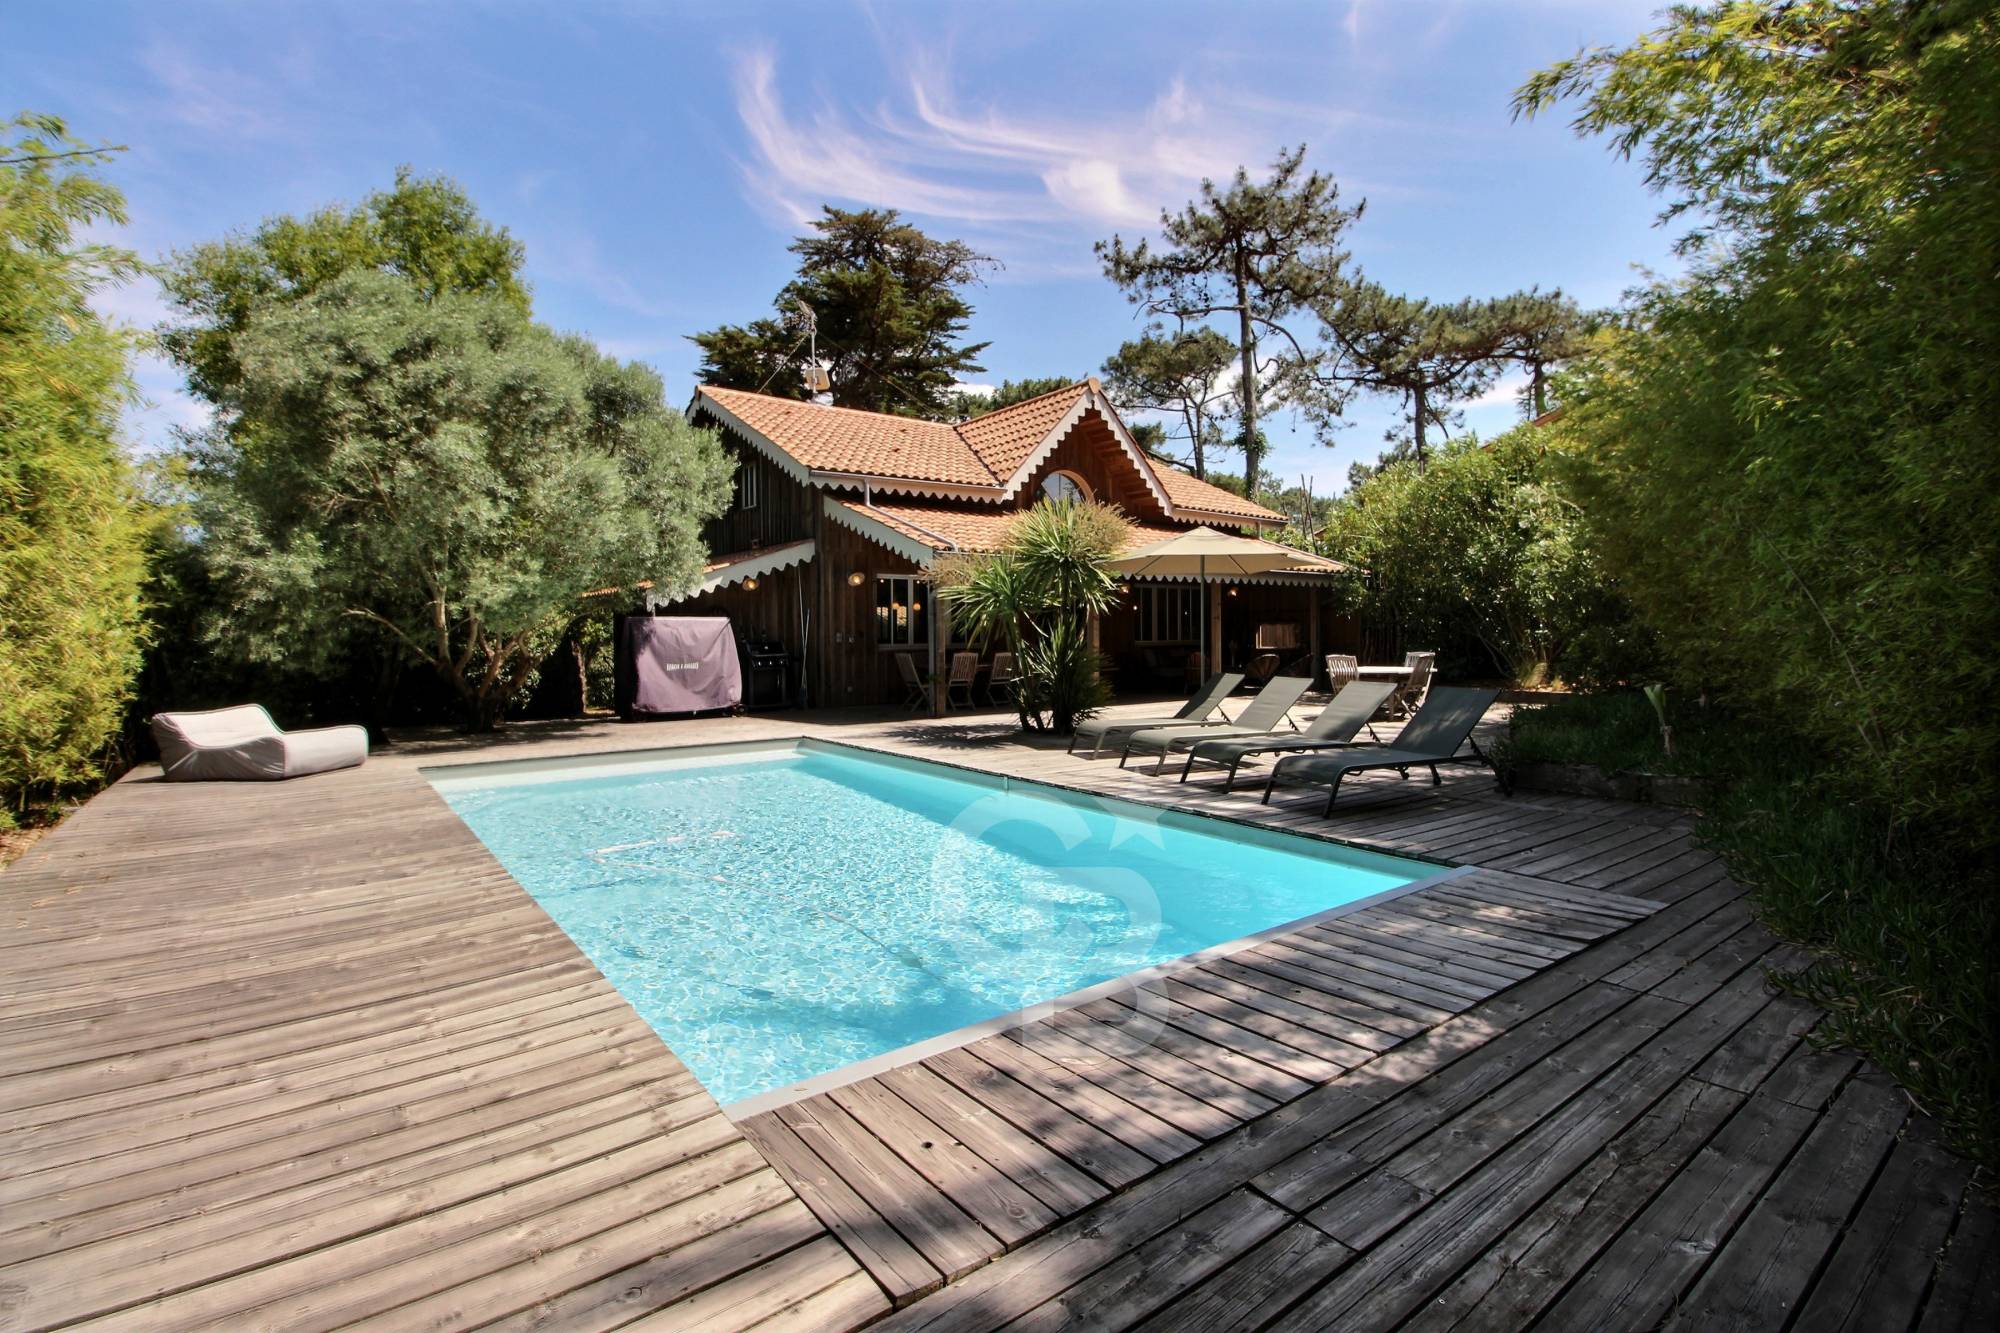 Location villa 4 chambres avec piscine chauffée - Cap-Ferret